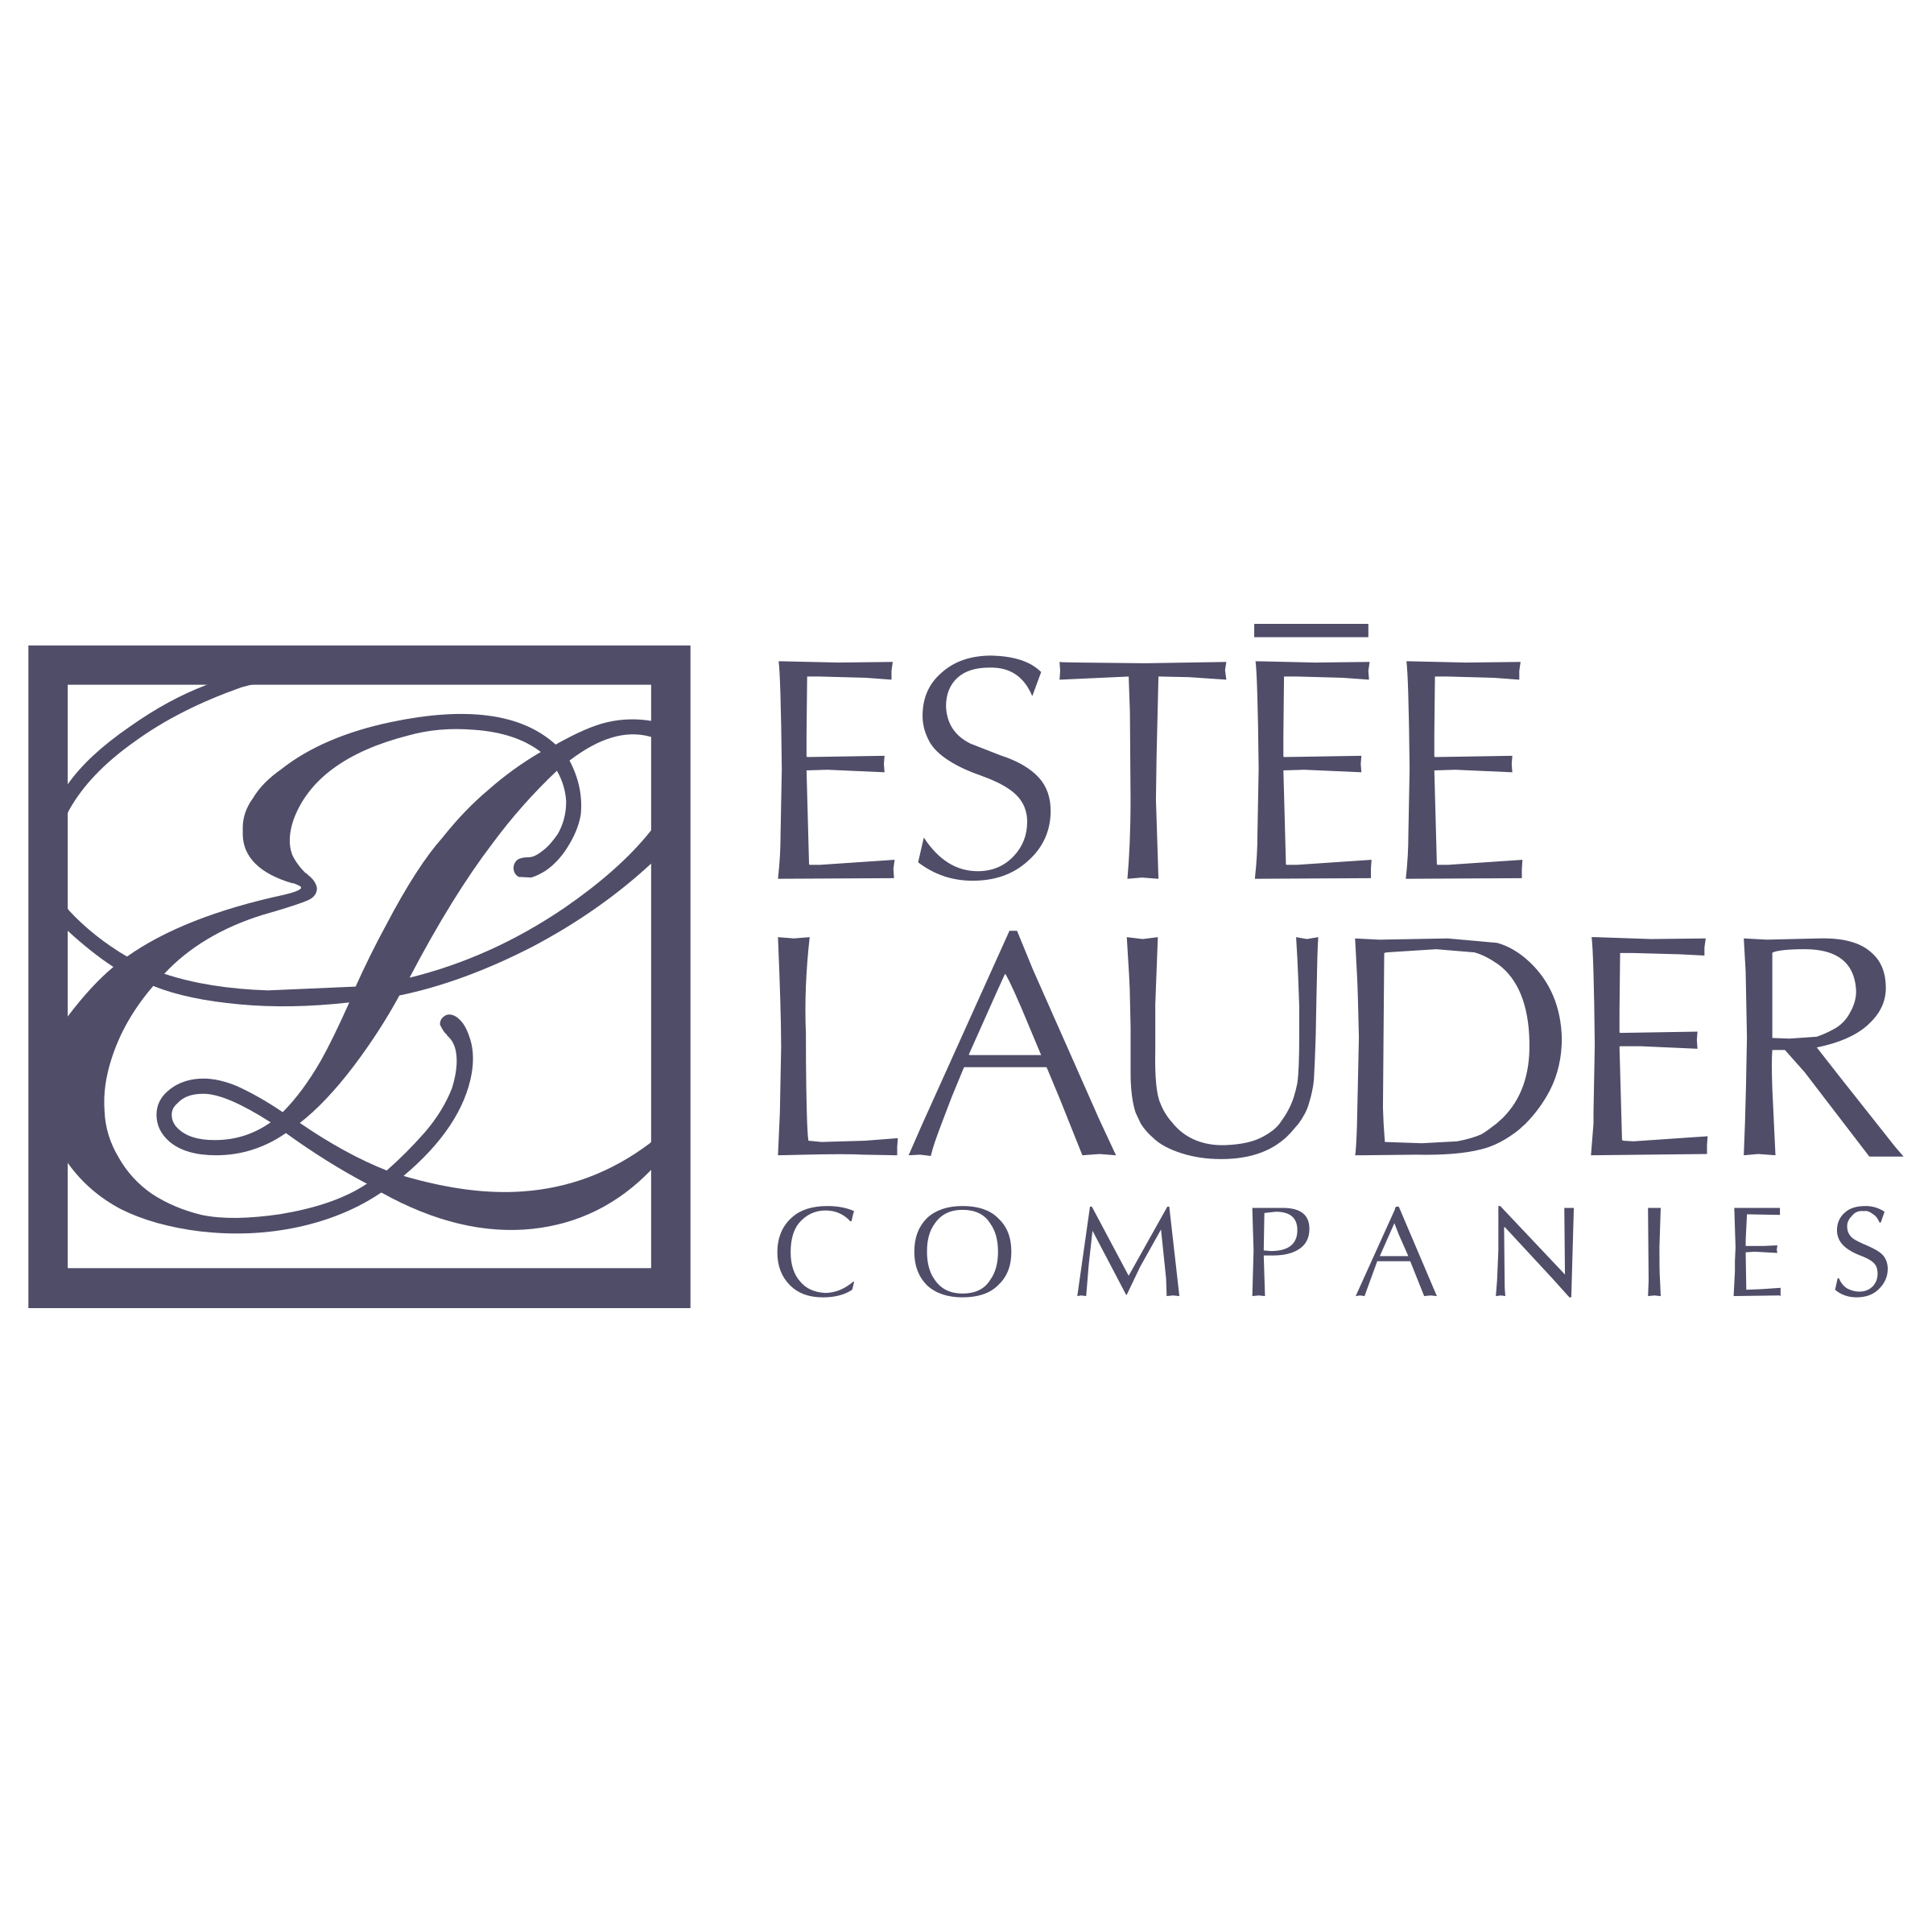 Estee Lauder logo PNG descargar imagen | PNG Arts